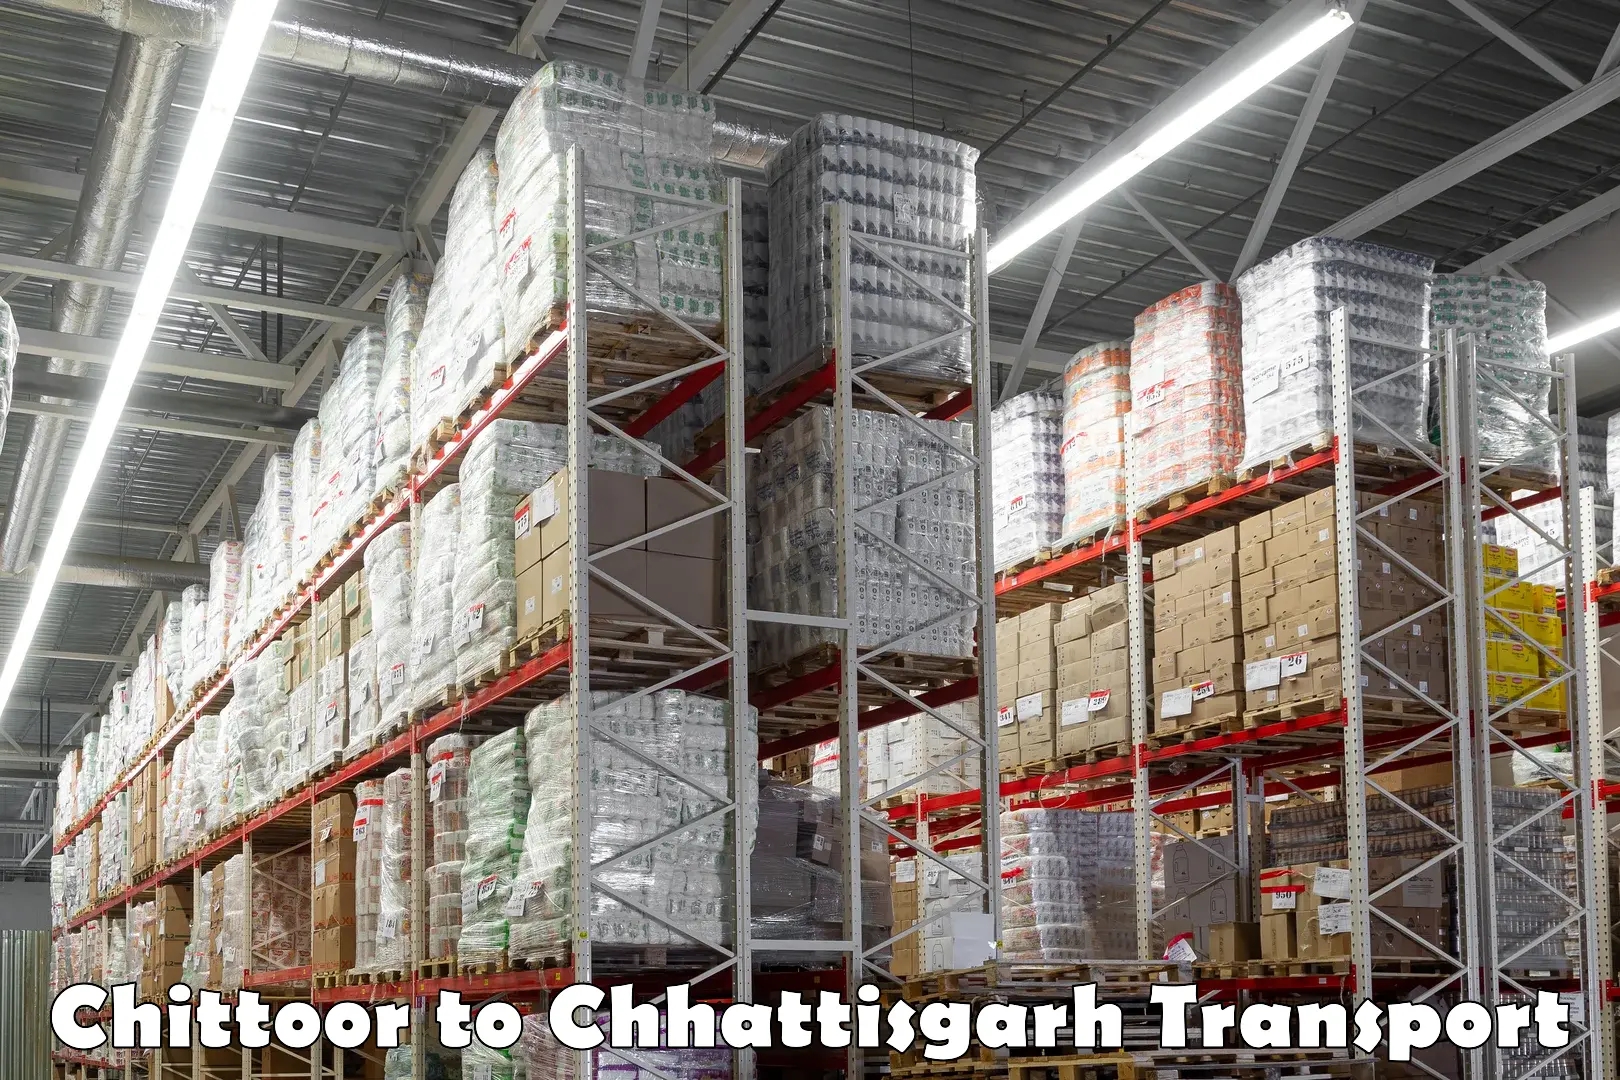 Transport in sharing Chittoor to Chhattisgarh